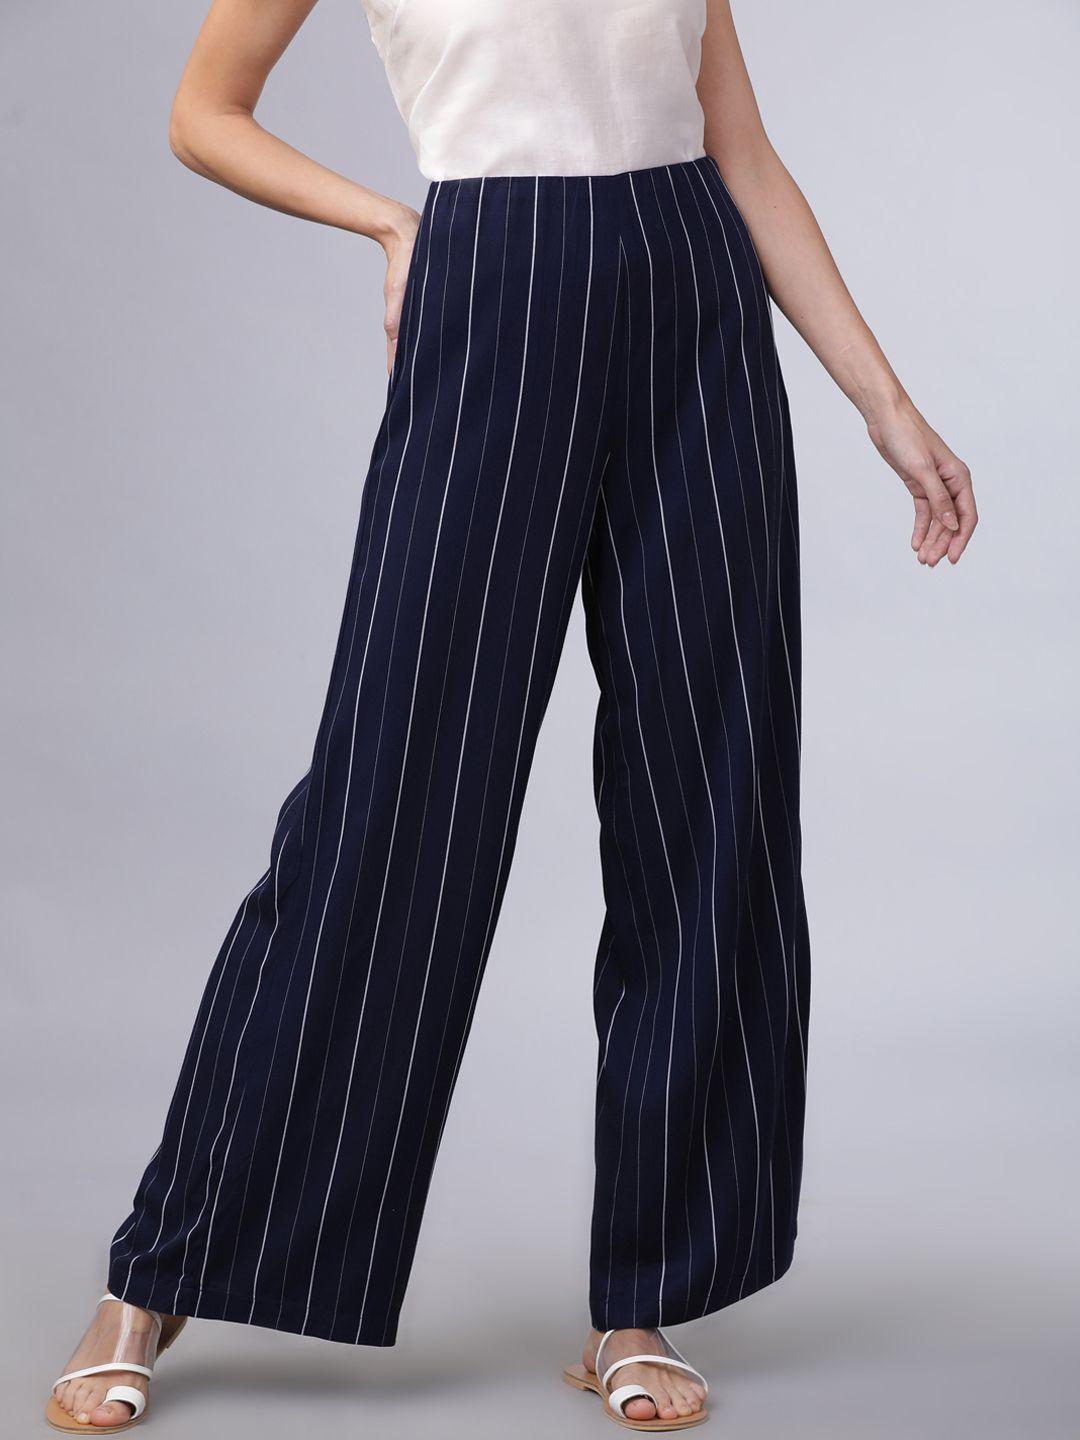 tokyo talkies women navy blue & white regular fit striped culottes